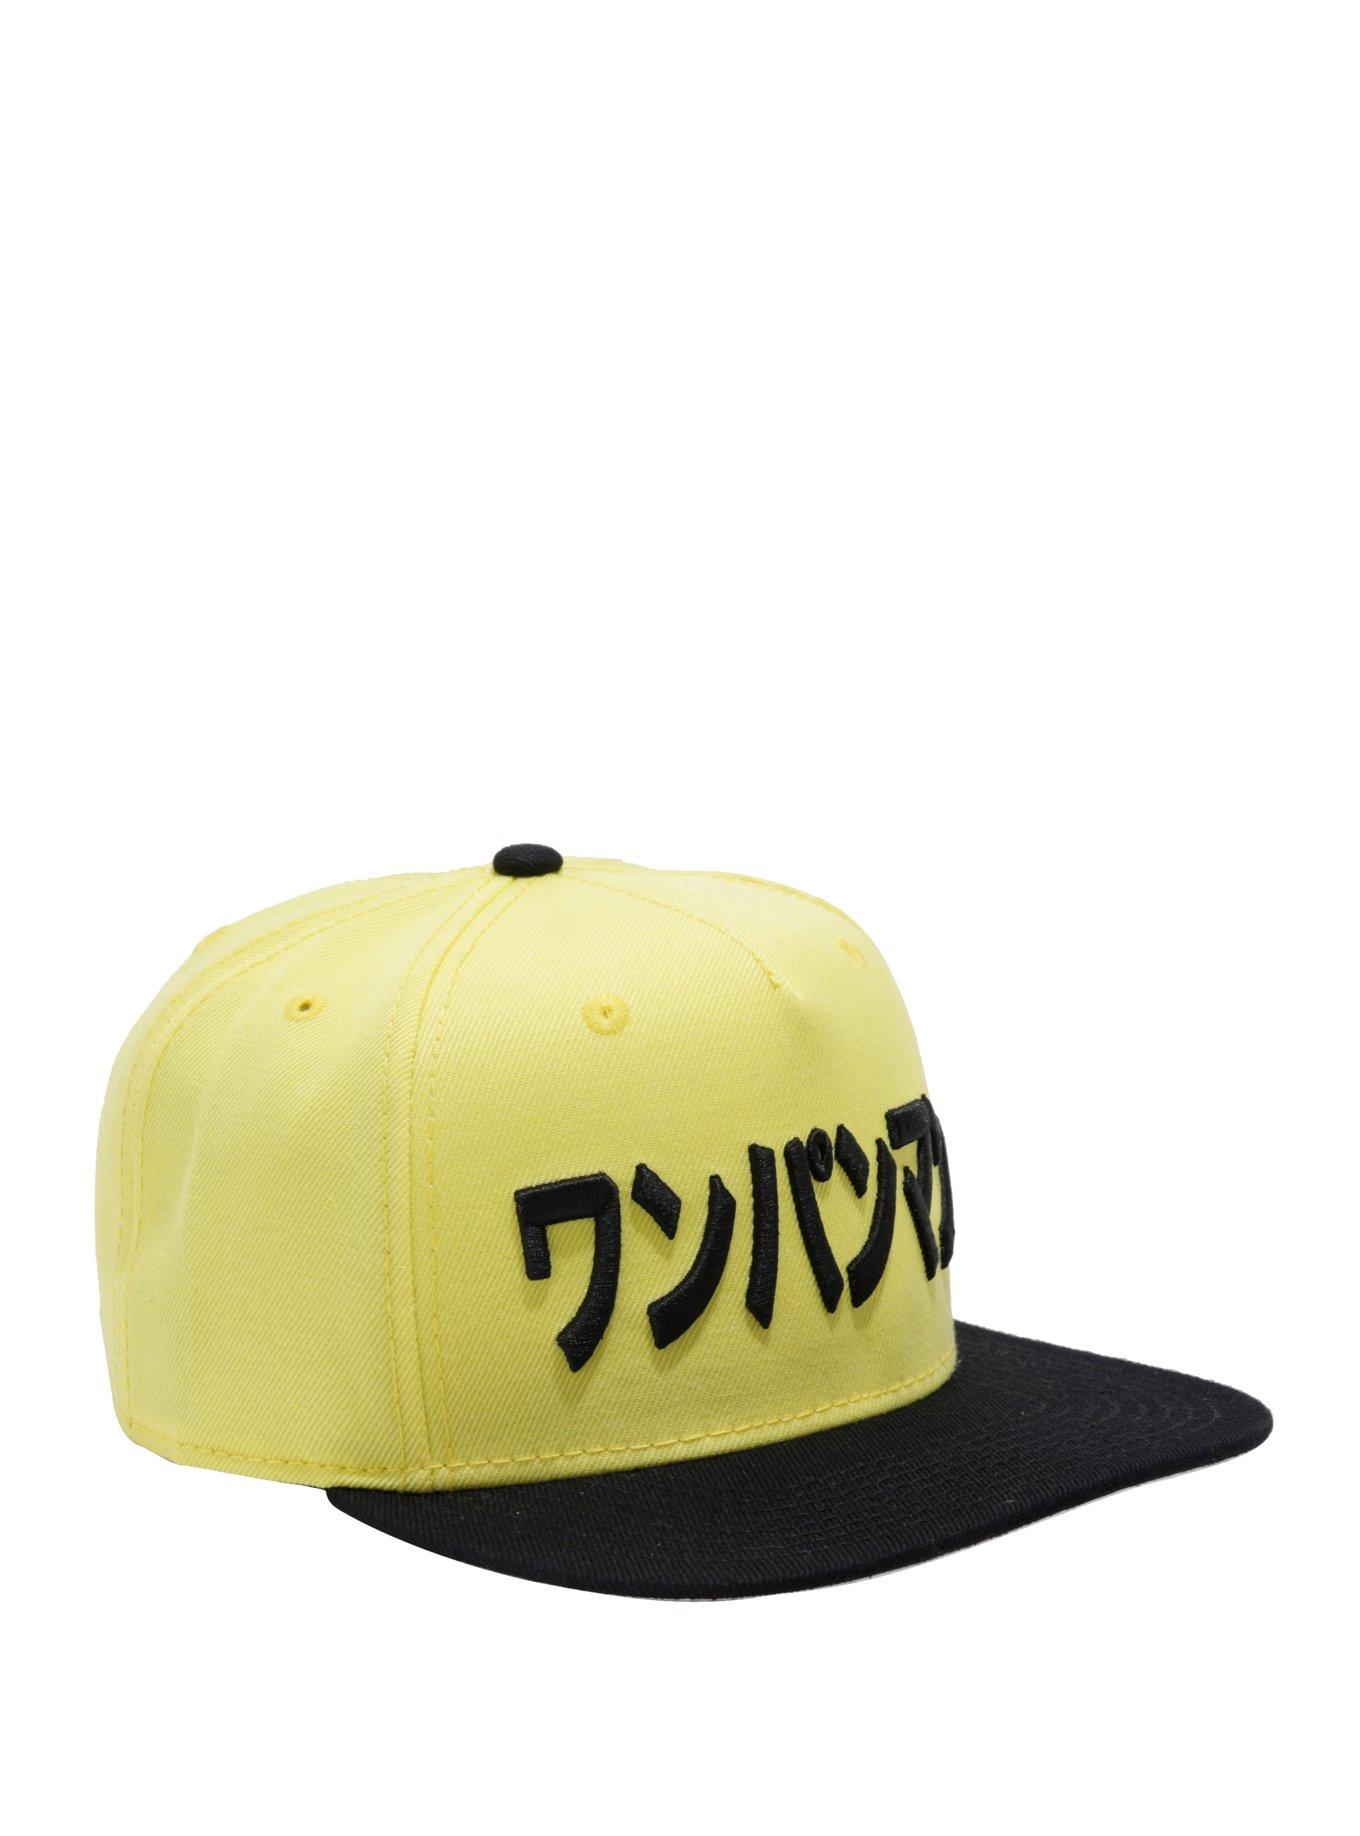 One Punch Man Japanese Logo Snapback Hat, , hi-res